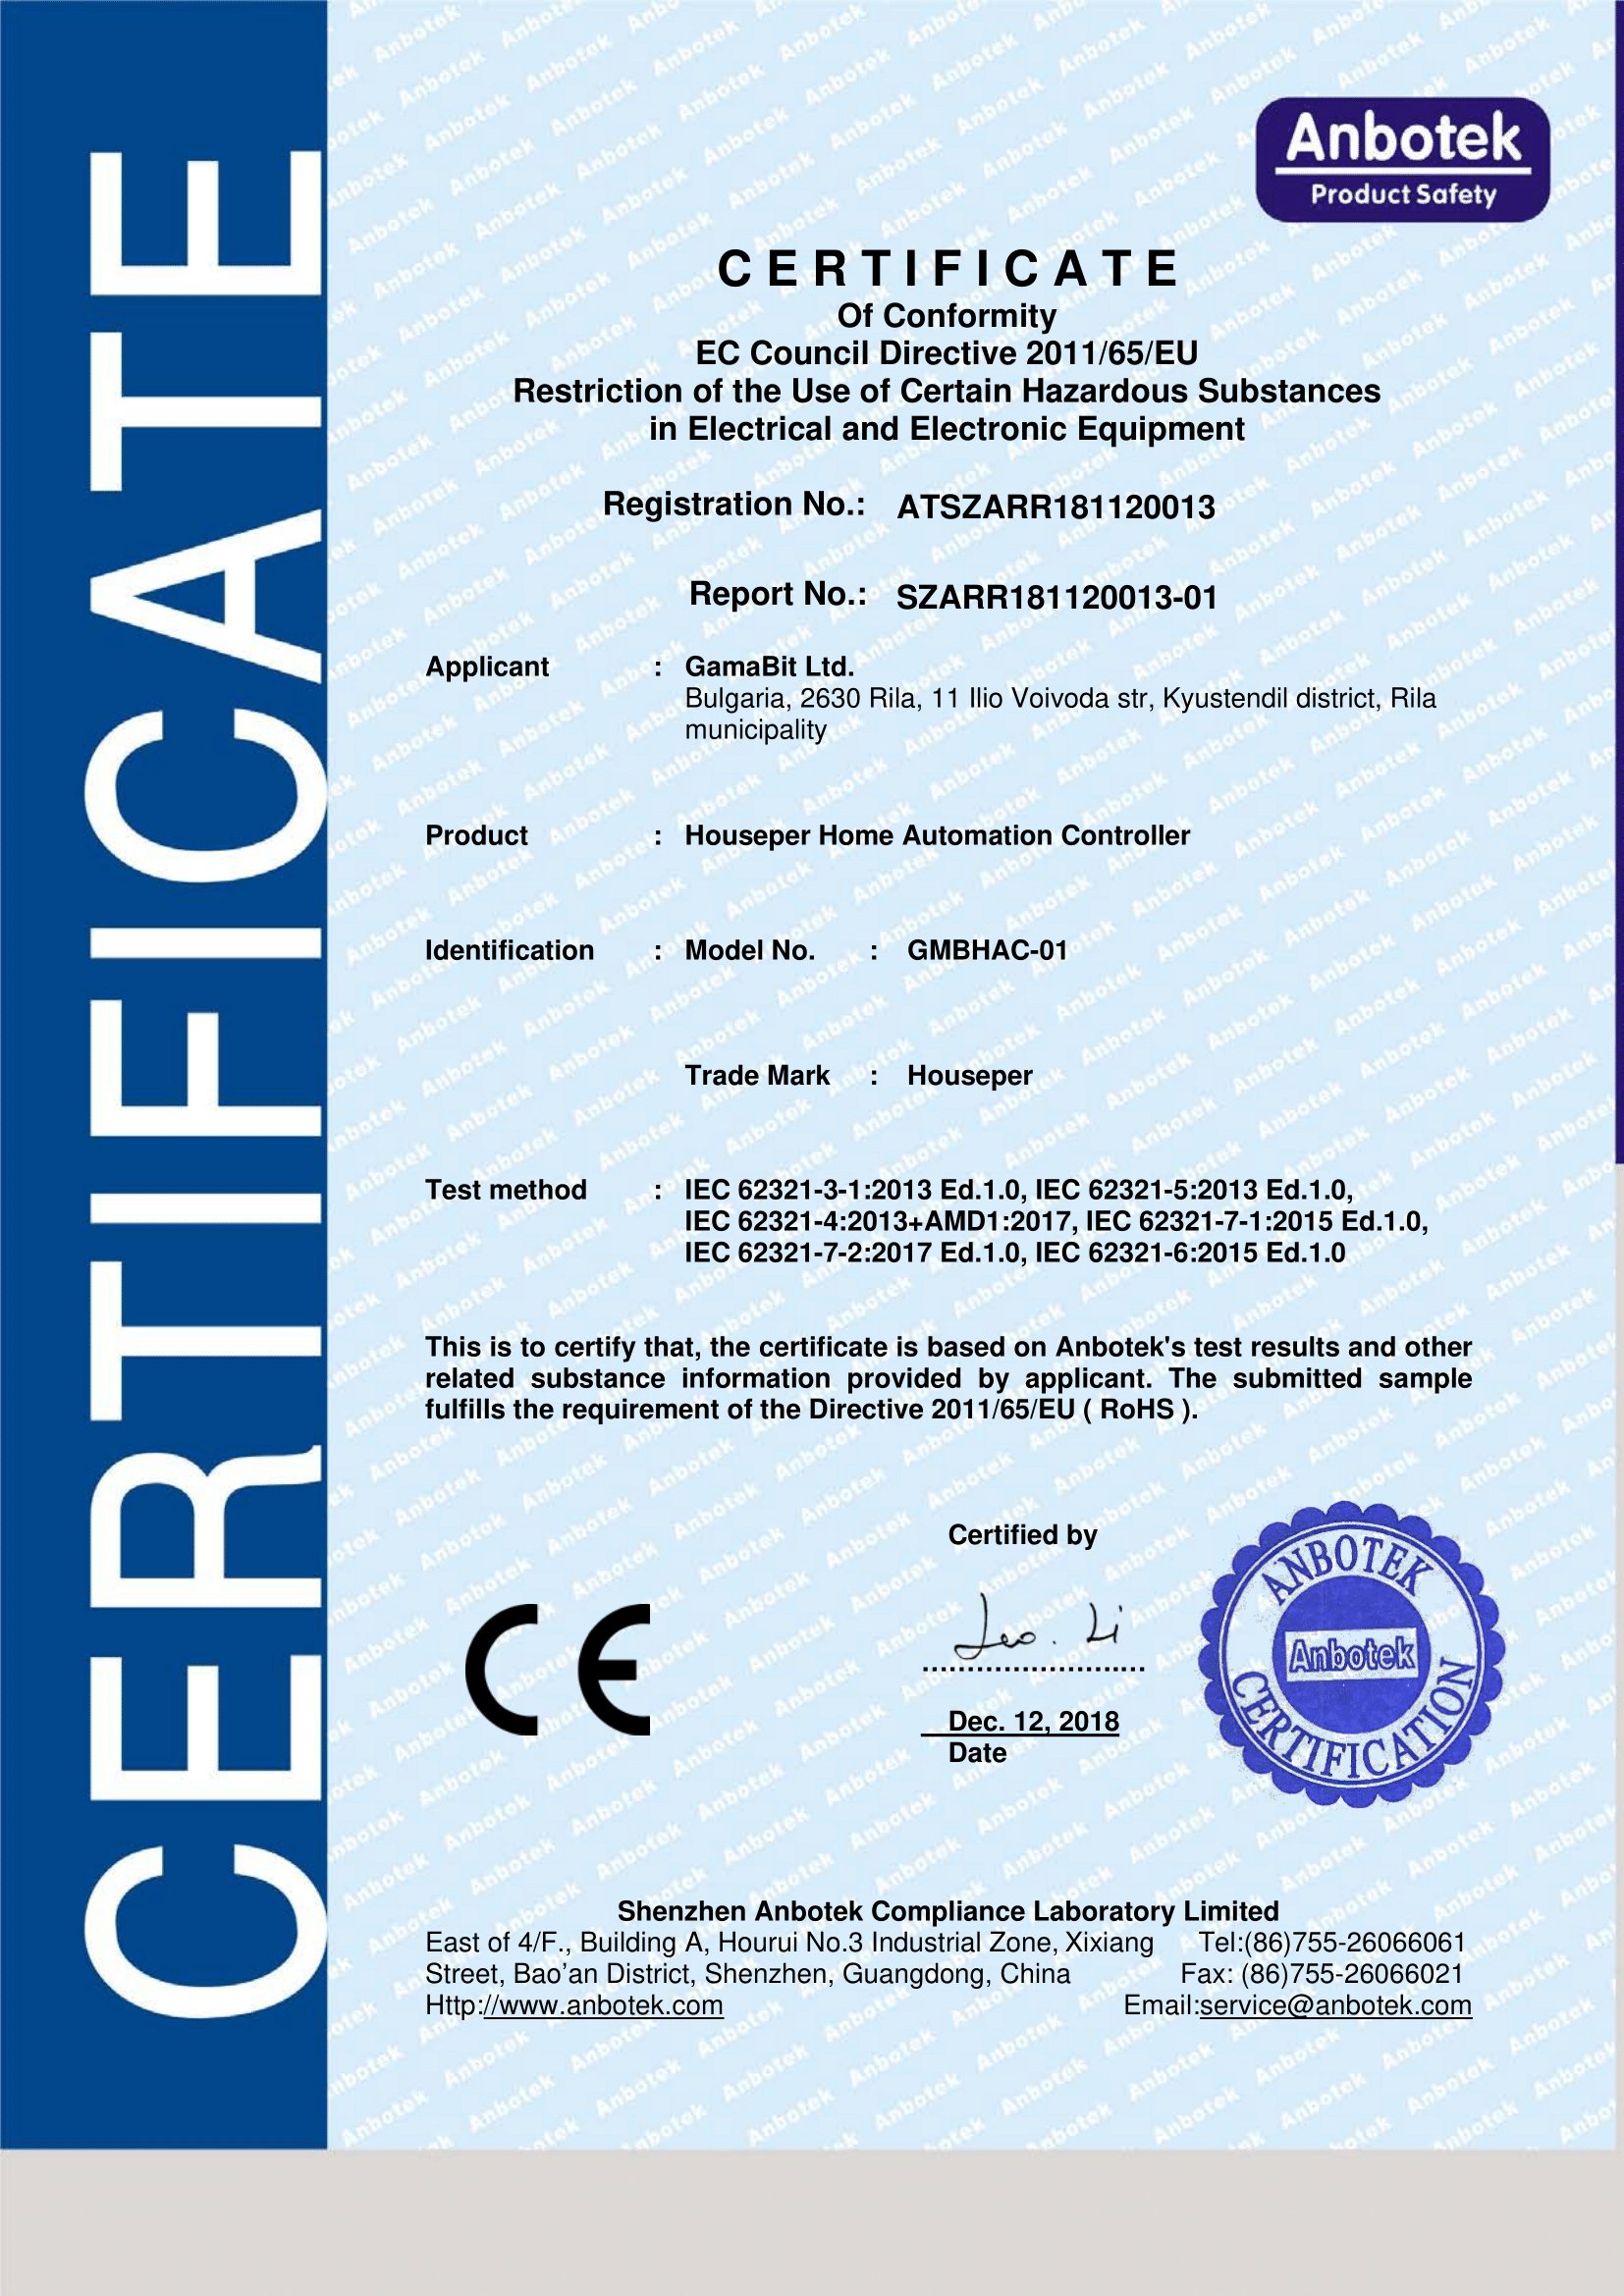 Houseper RoHS certificate